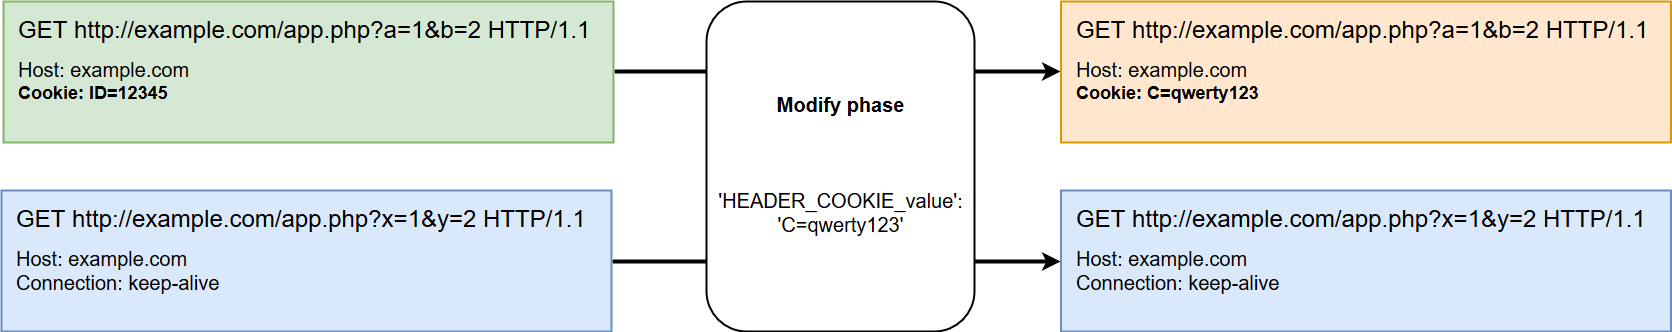 Modify phase